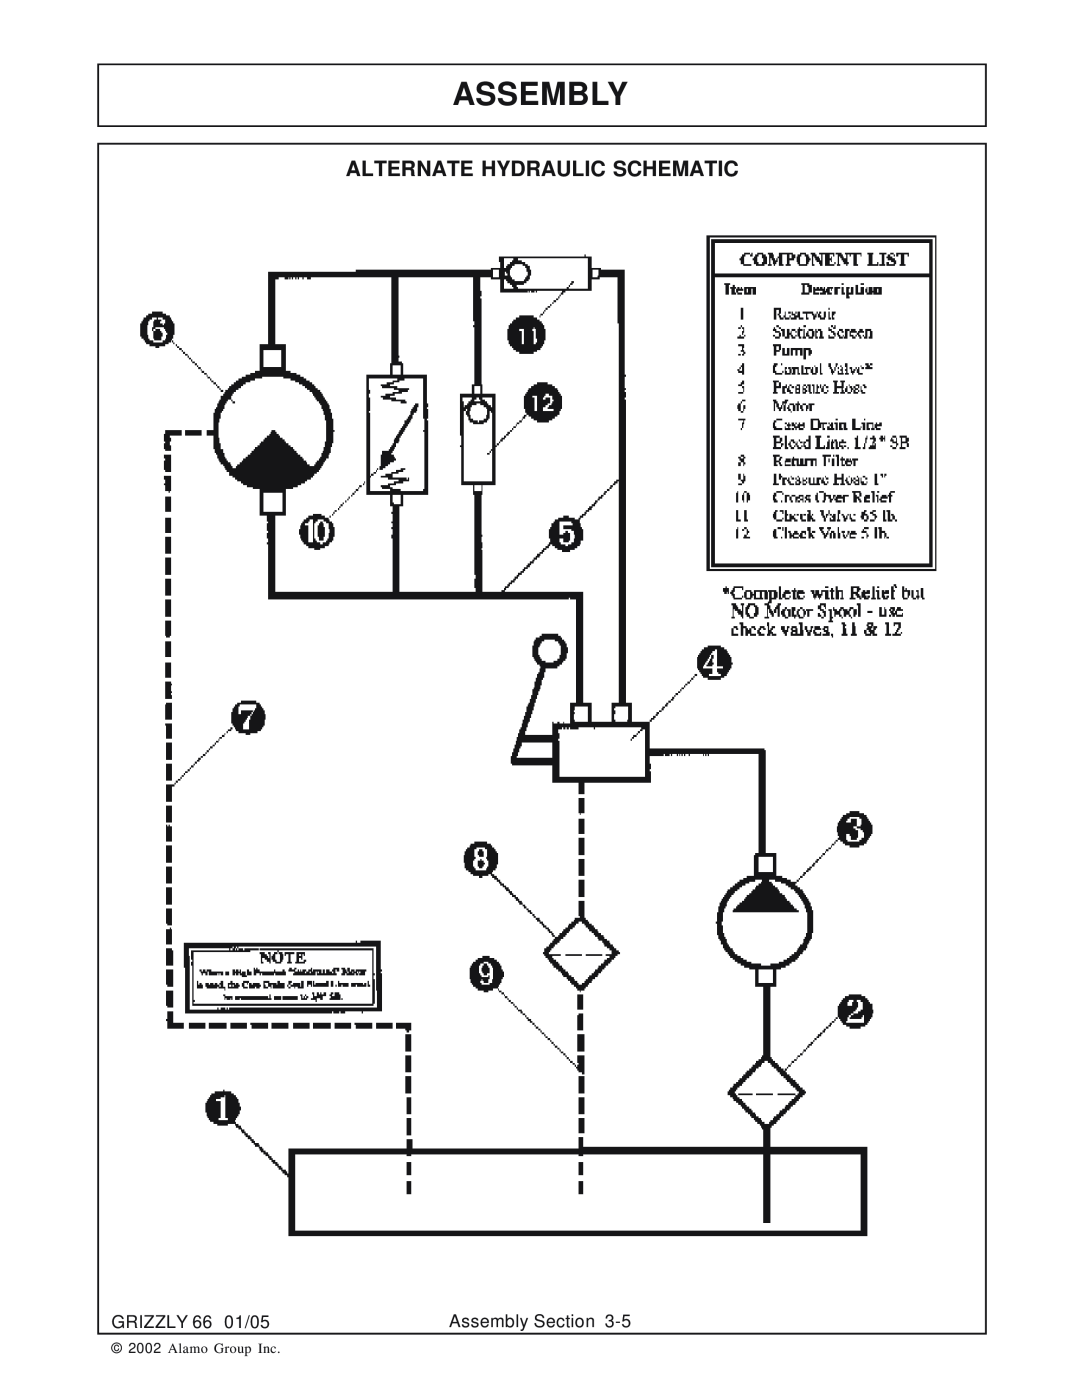 Alamo 66 manual Assembly, Alternate Hydraulic Schematic, Alamo Group Inc 